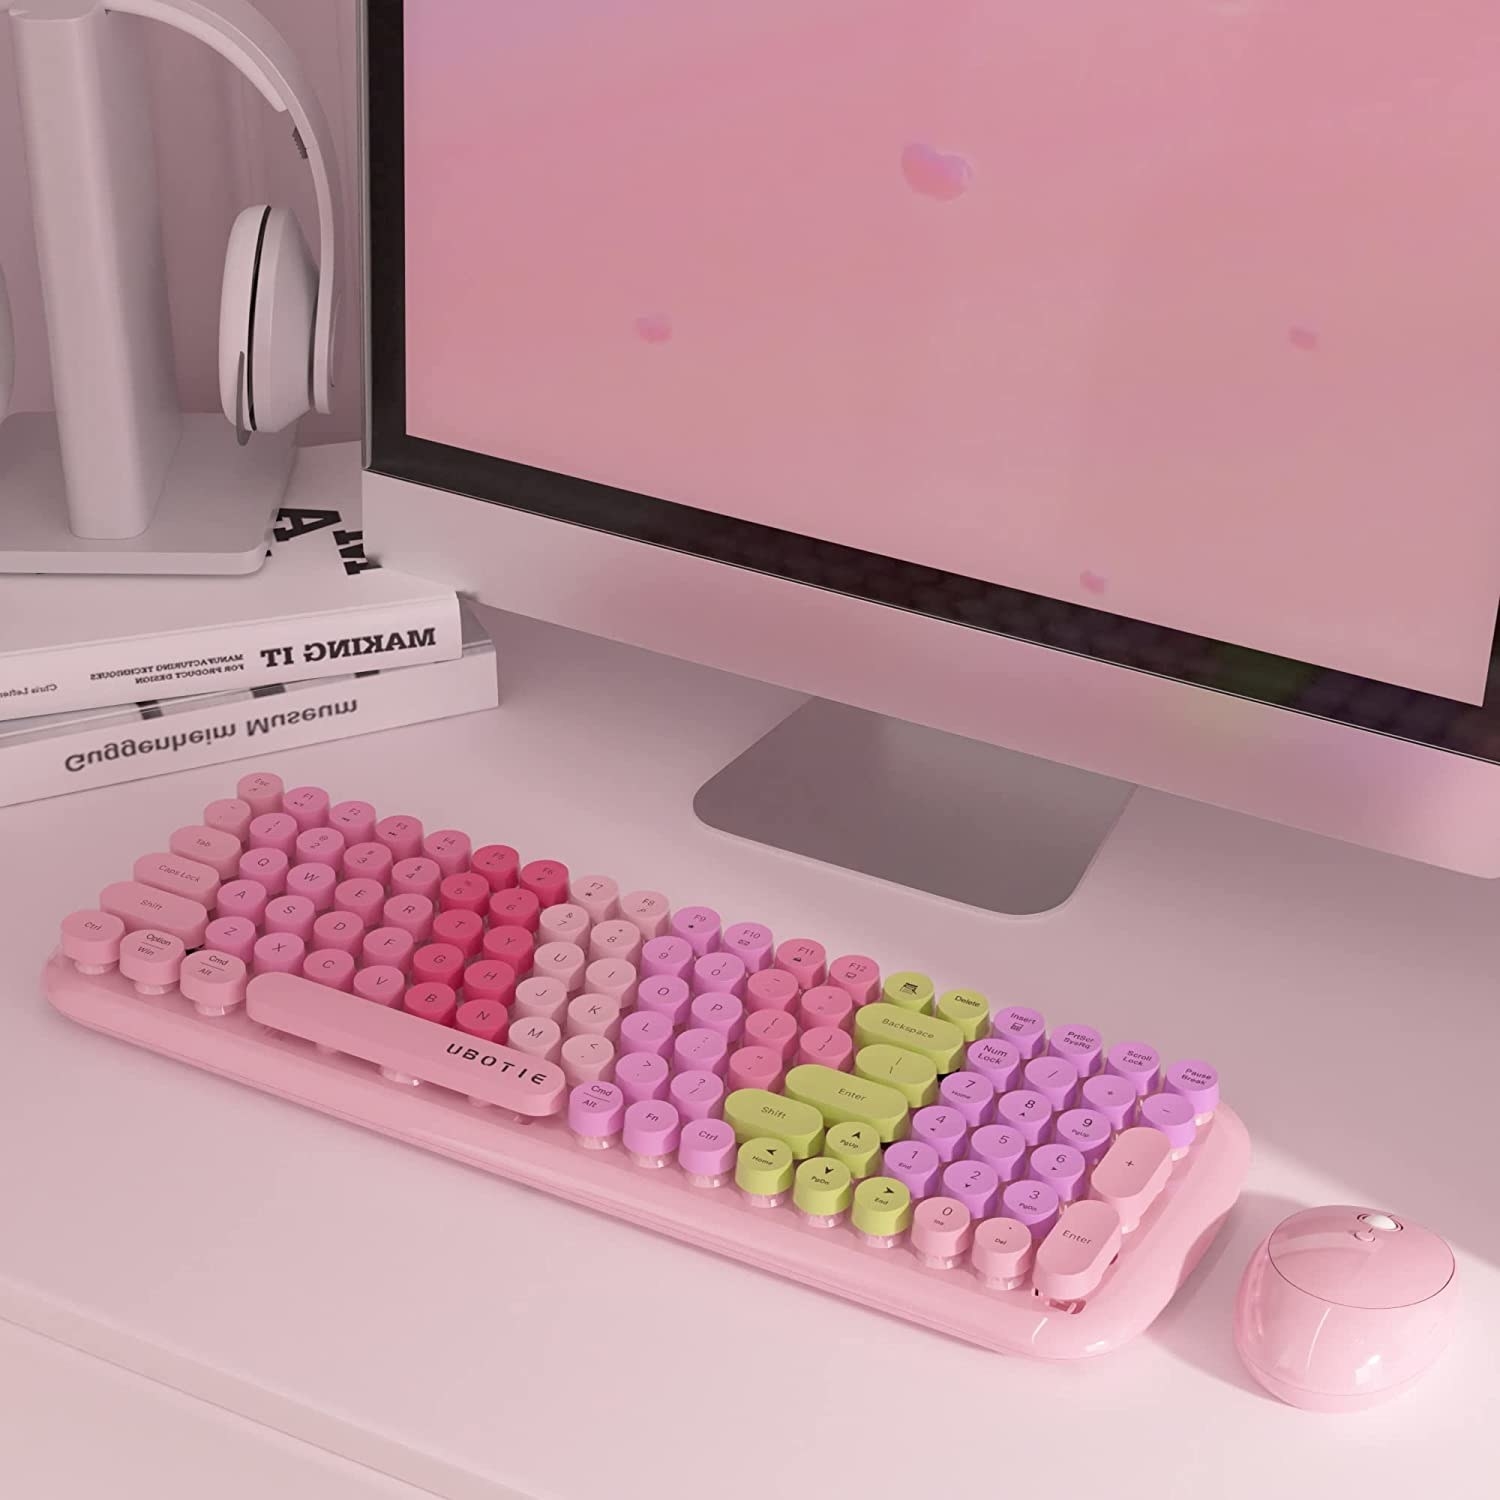 a chunky keyboard on a desk